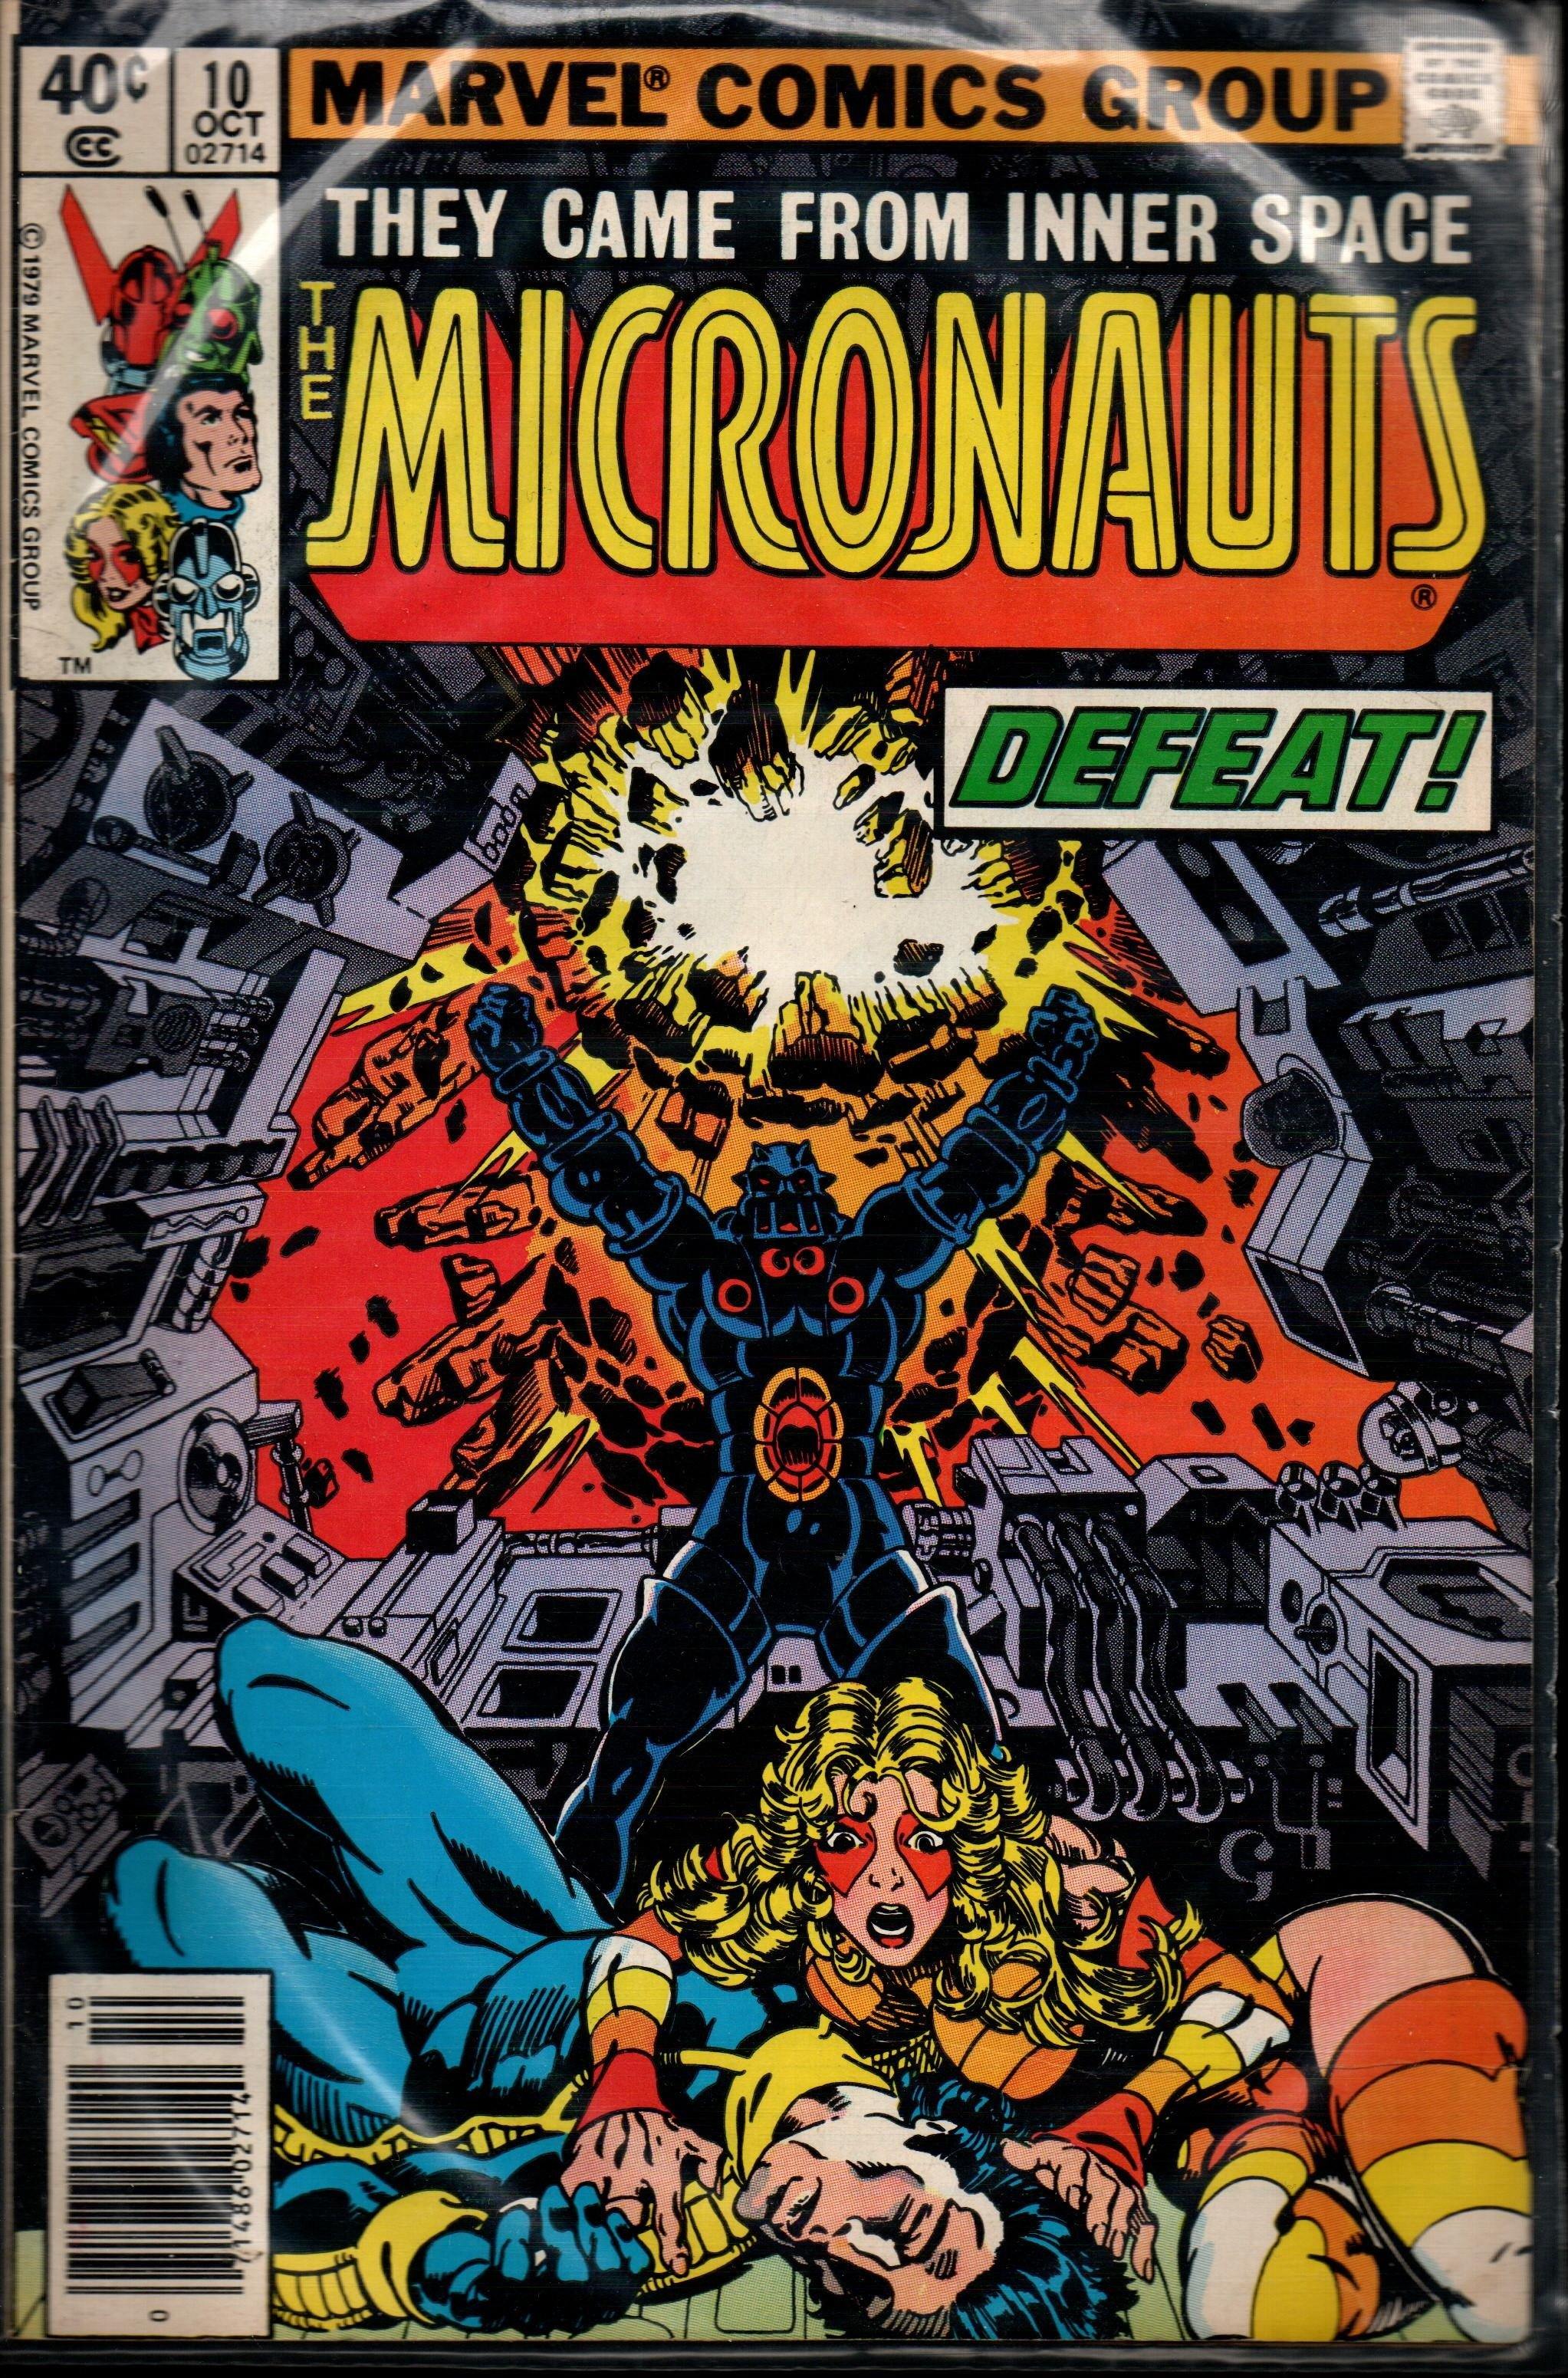 MICRONAUTS # 10 (1ST SERIES) OCT 1979